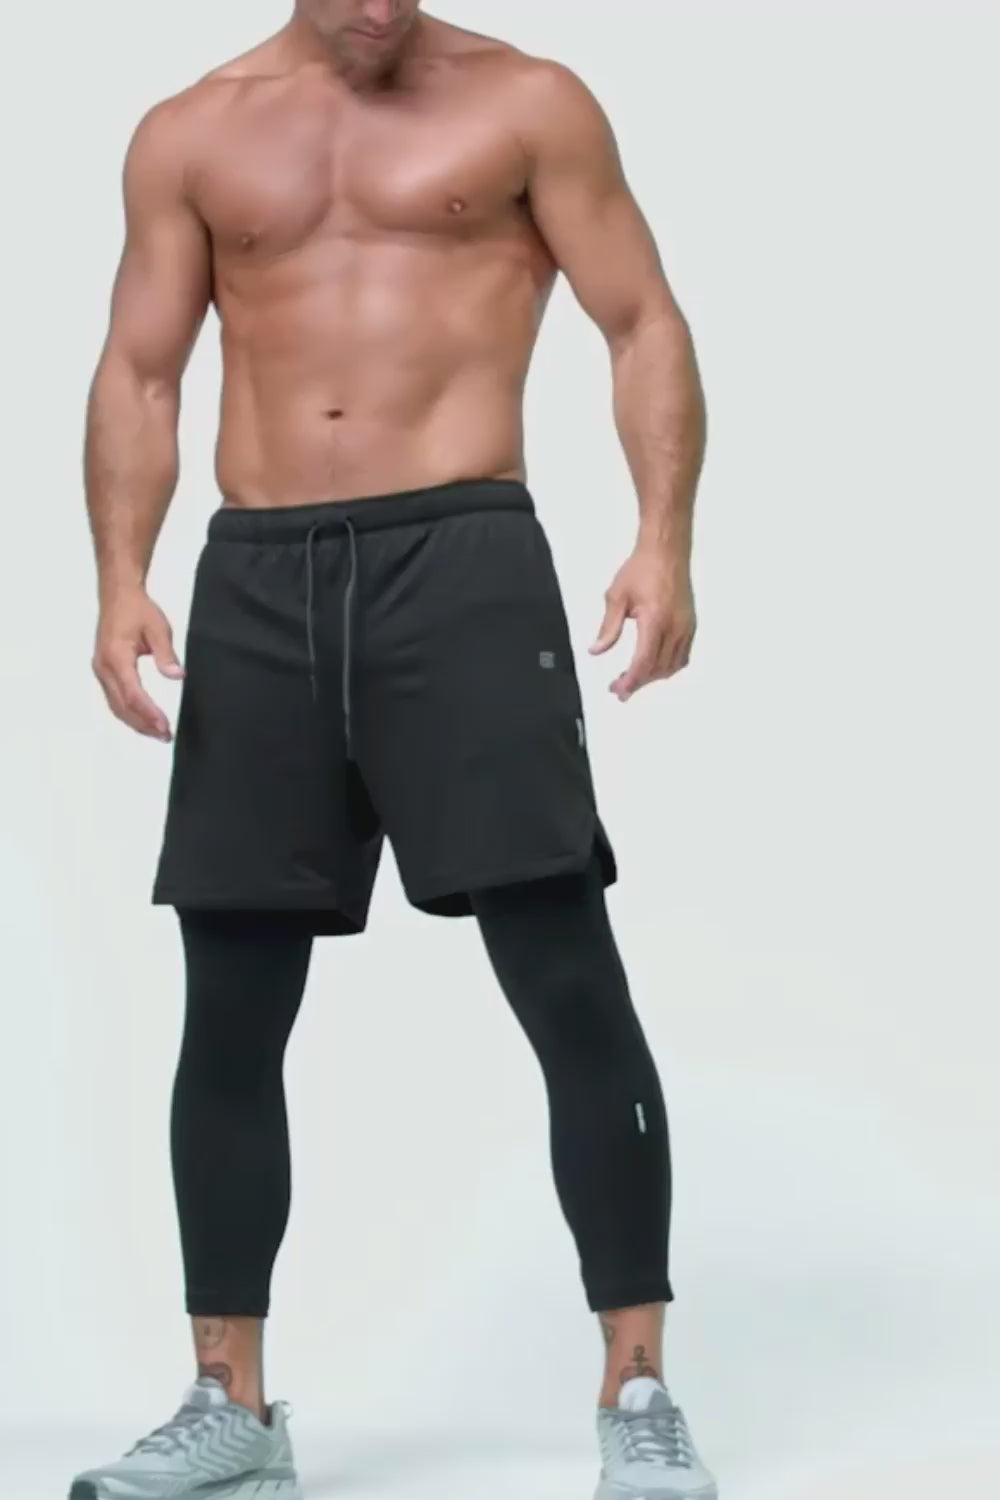 Men Sport Pants With Pockets 2-in-1 Liner Leggings Athletic Shorts Workout  Sportwear